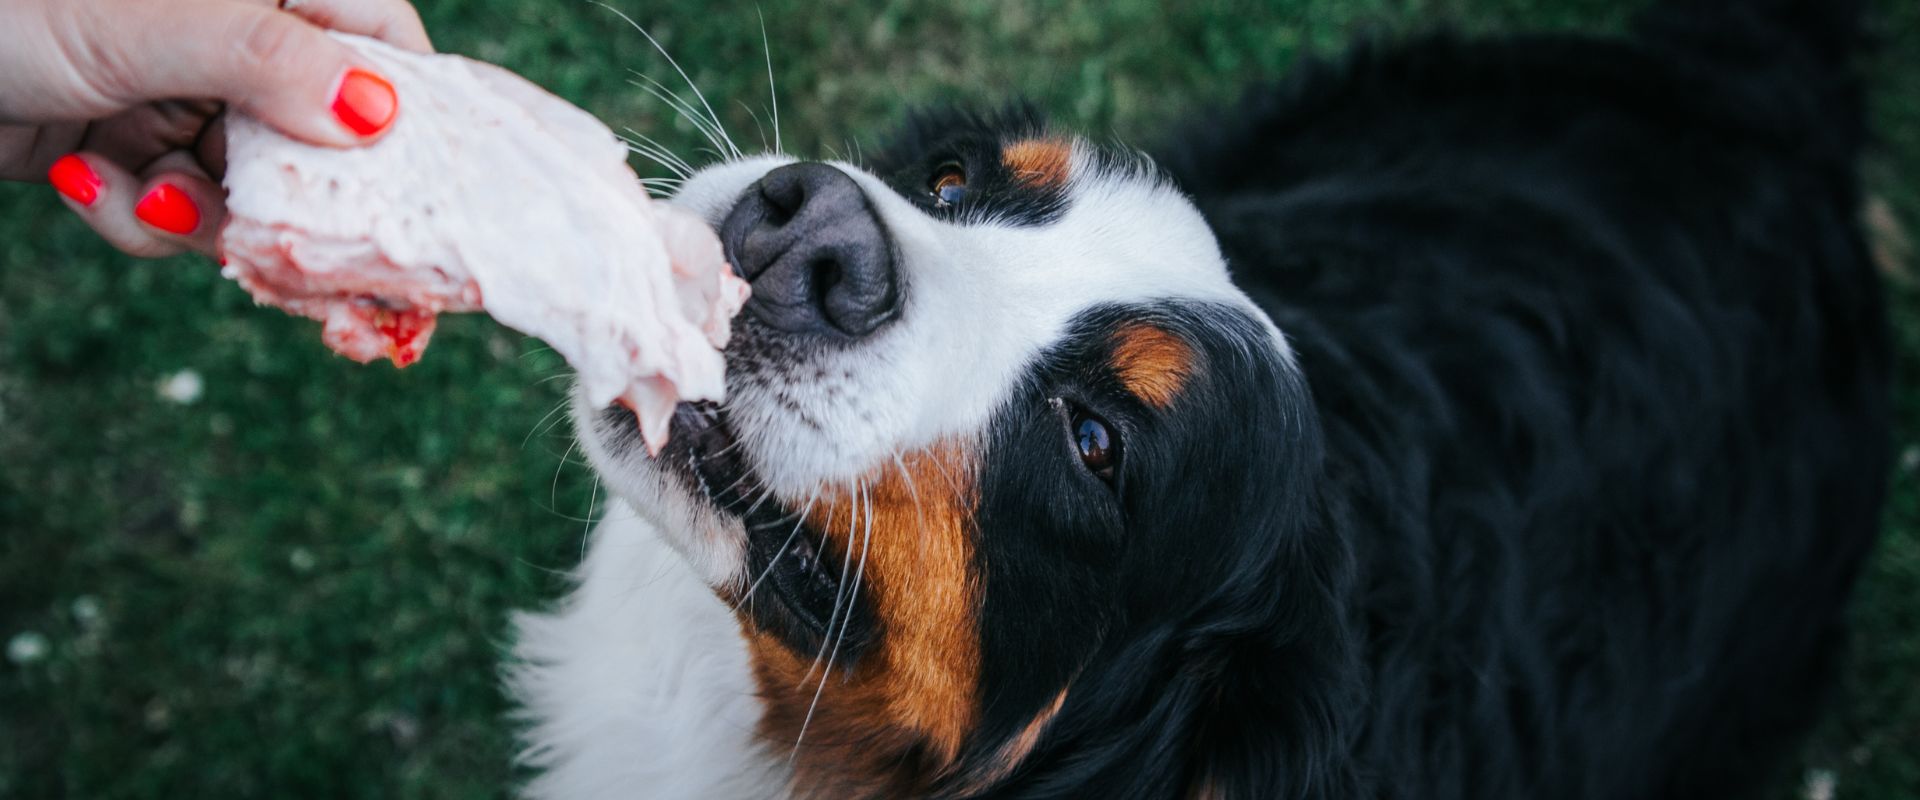 Bernese Mountain dog eating raw meat